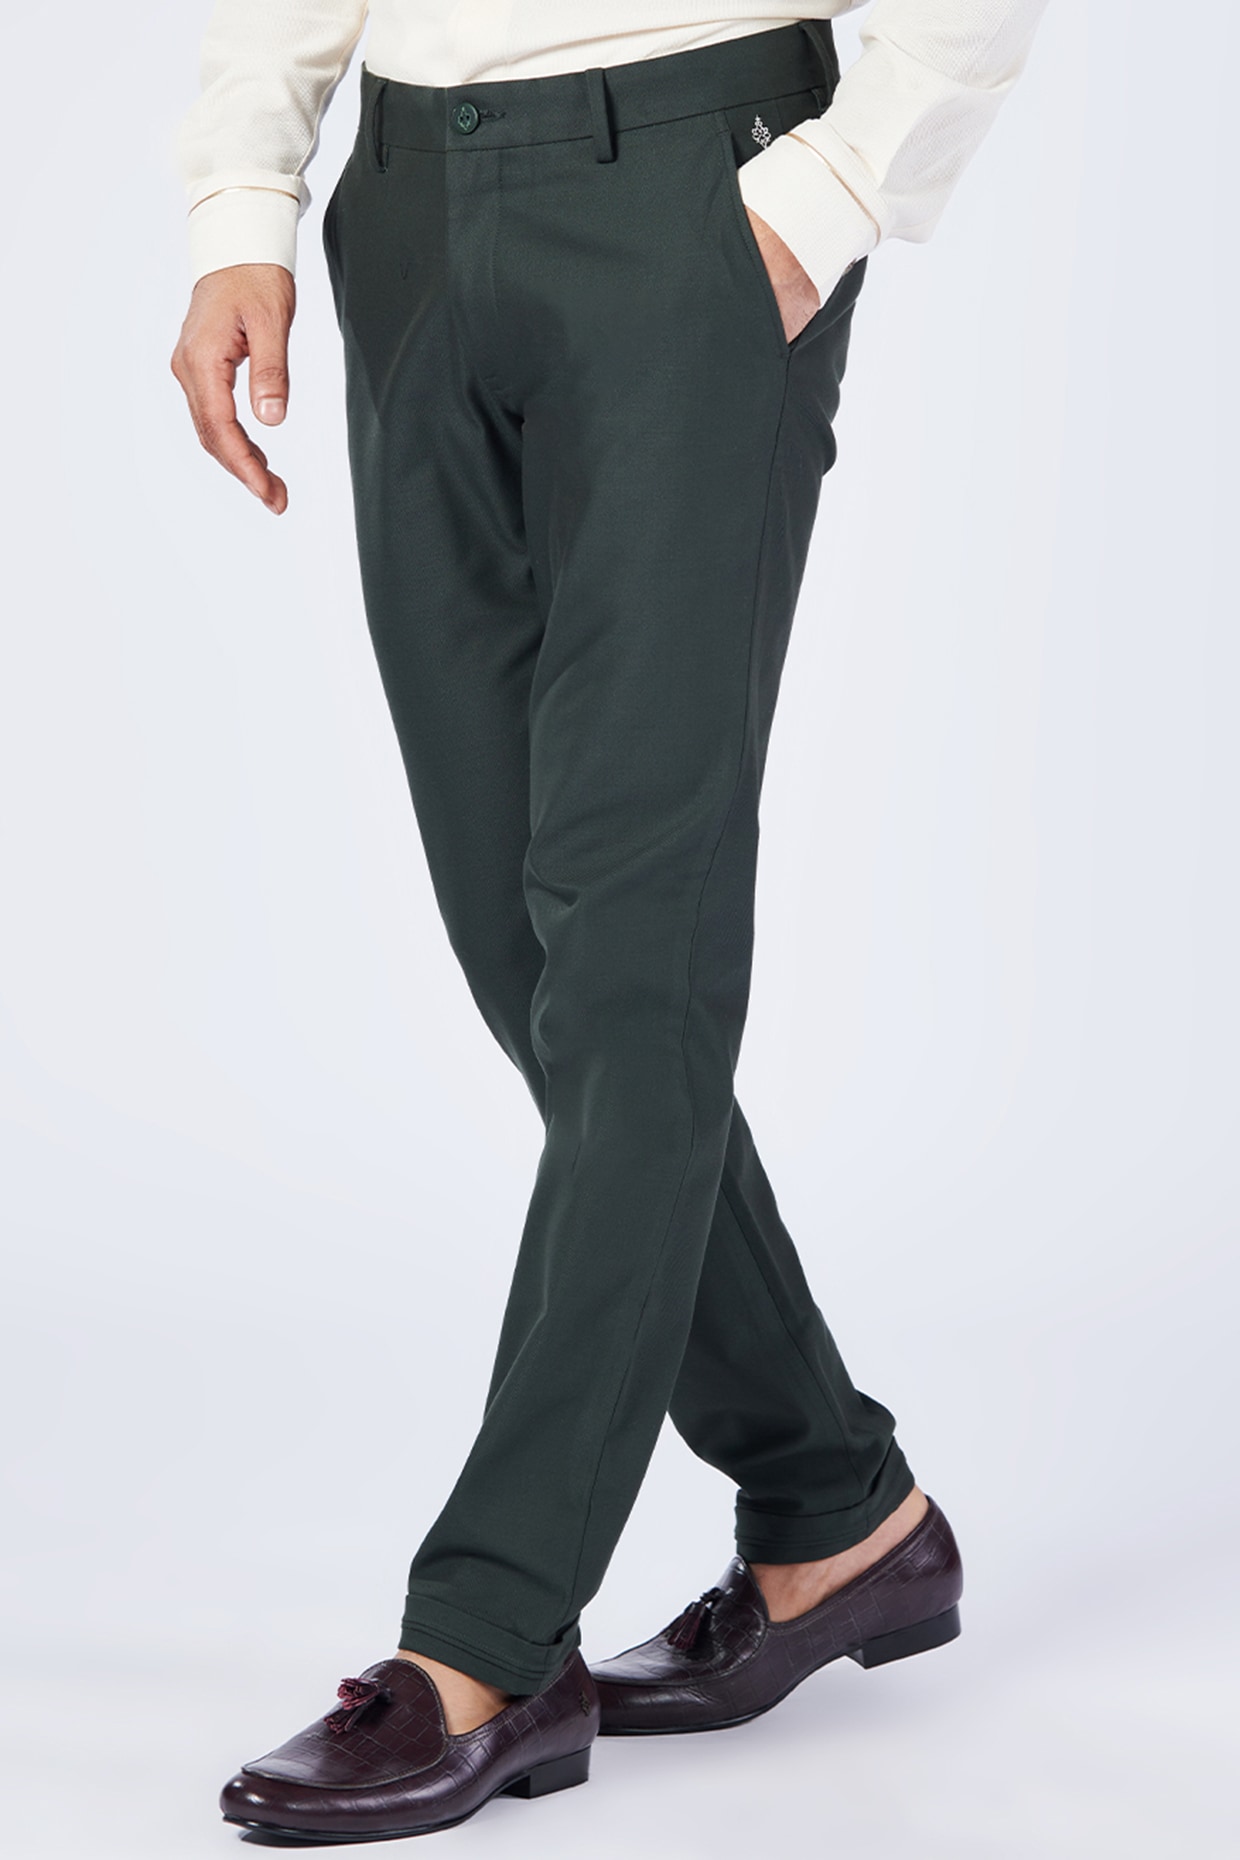 Vedolay Men's Pants Cargo Pants for Men Plus Size with Pocket Joggers  Outdoor Casual Fashion Loose Trousers -hop Design Sports Pants,Black M -  Walmart.com